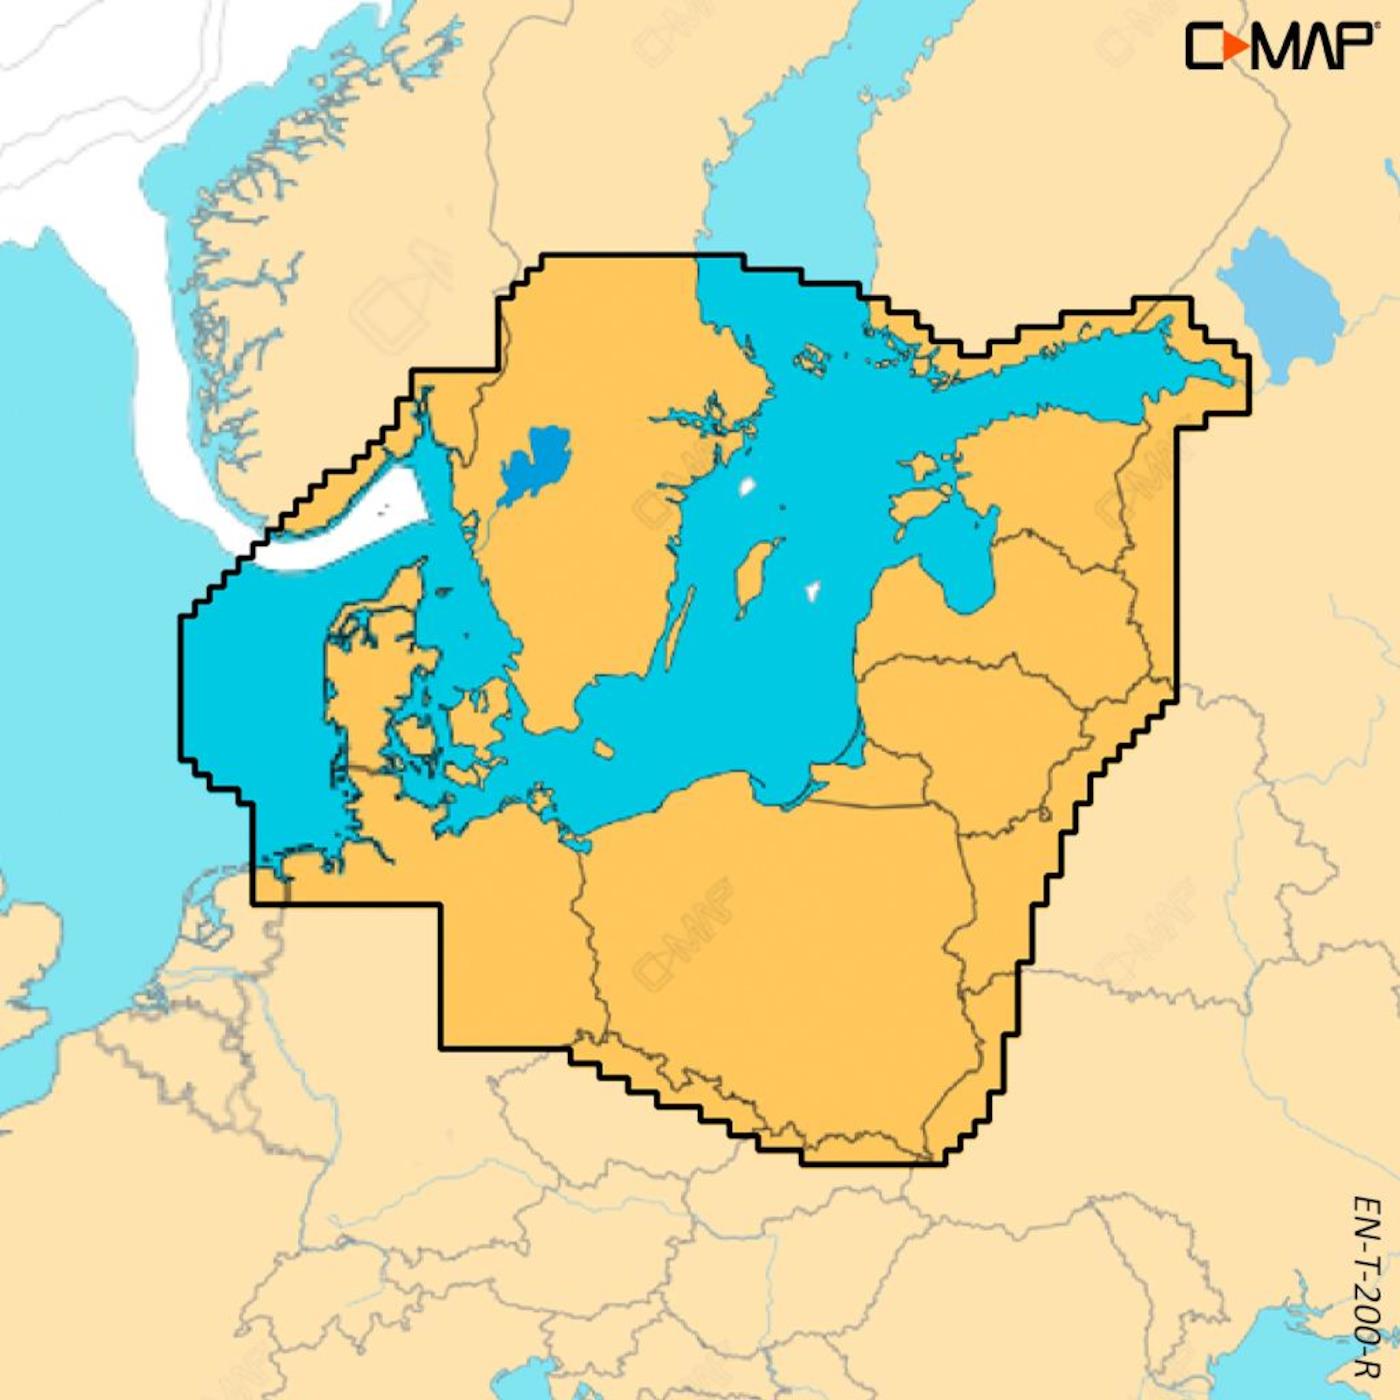 C-MAP Reveal X Ostsee & Dänemark (Baltic Sea & Denmark) EN-T-200